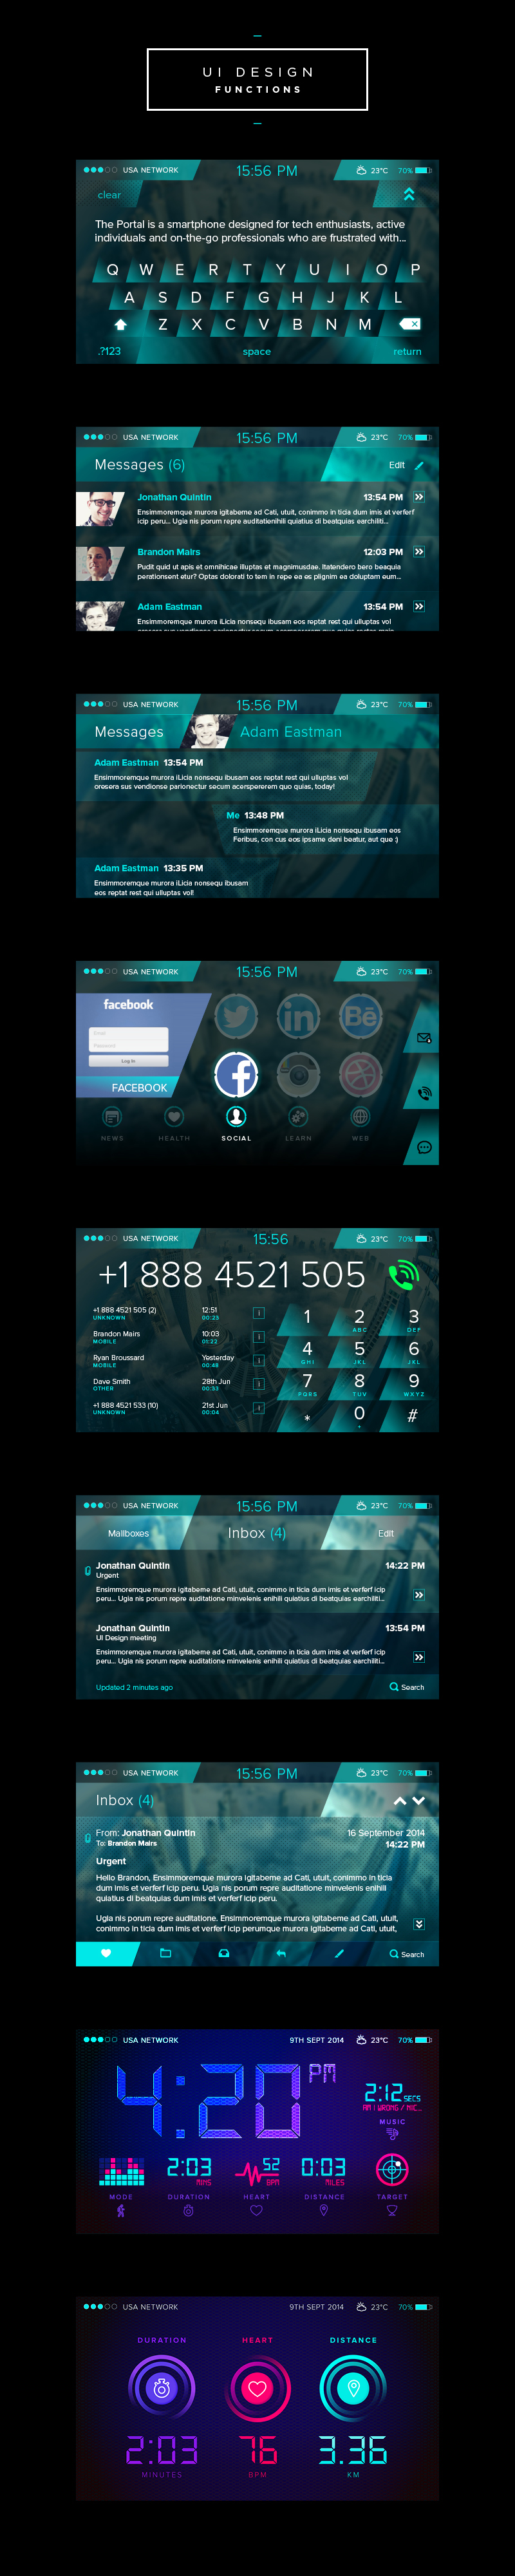 disruptoverload portalsmartphone phone Smart smartphone wearables mobile UI infographic info graphic Data visual concept